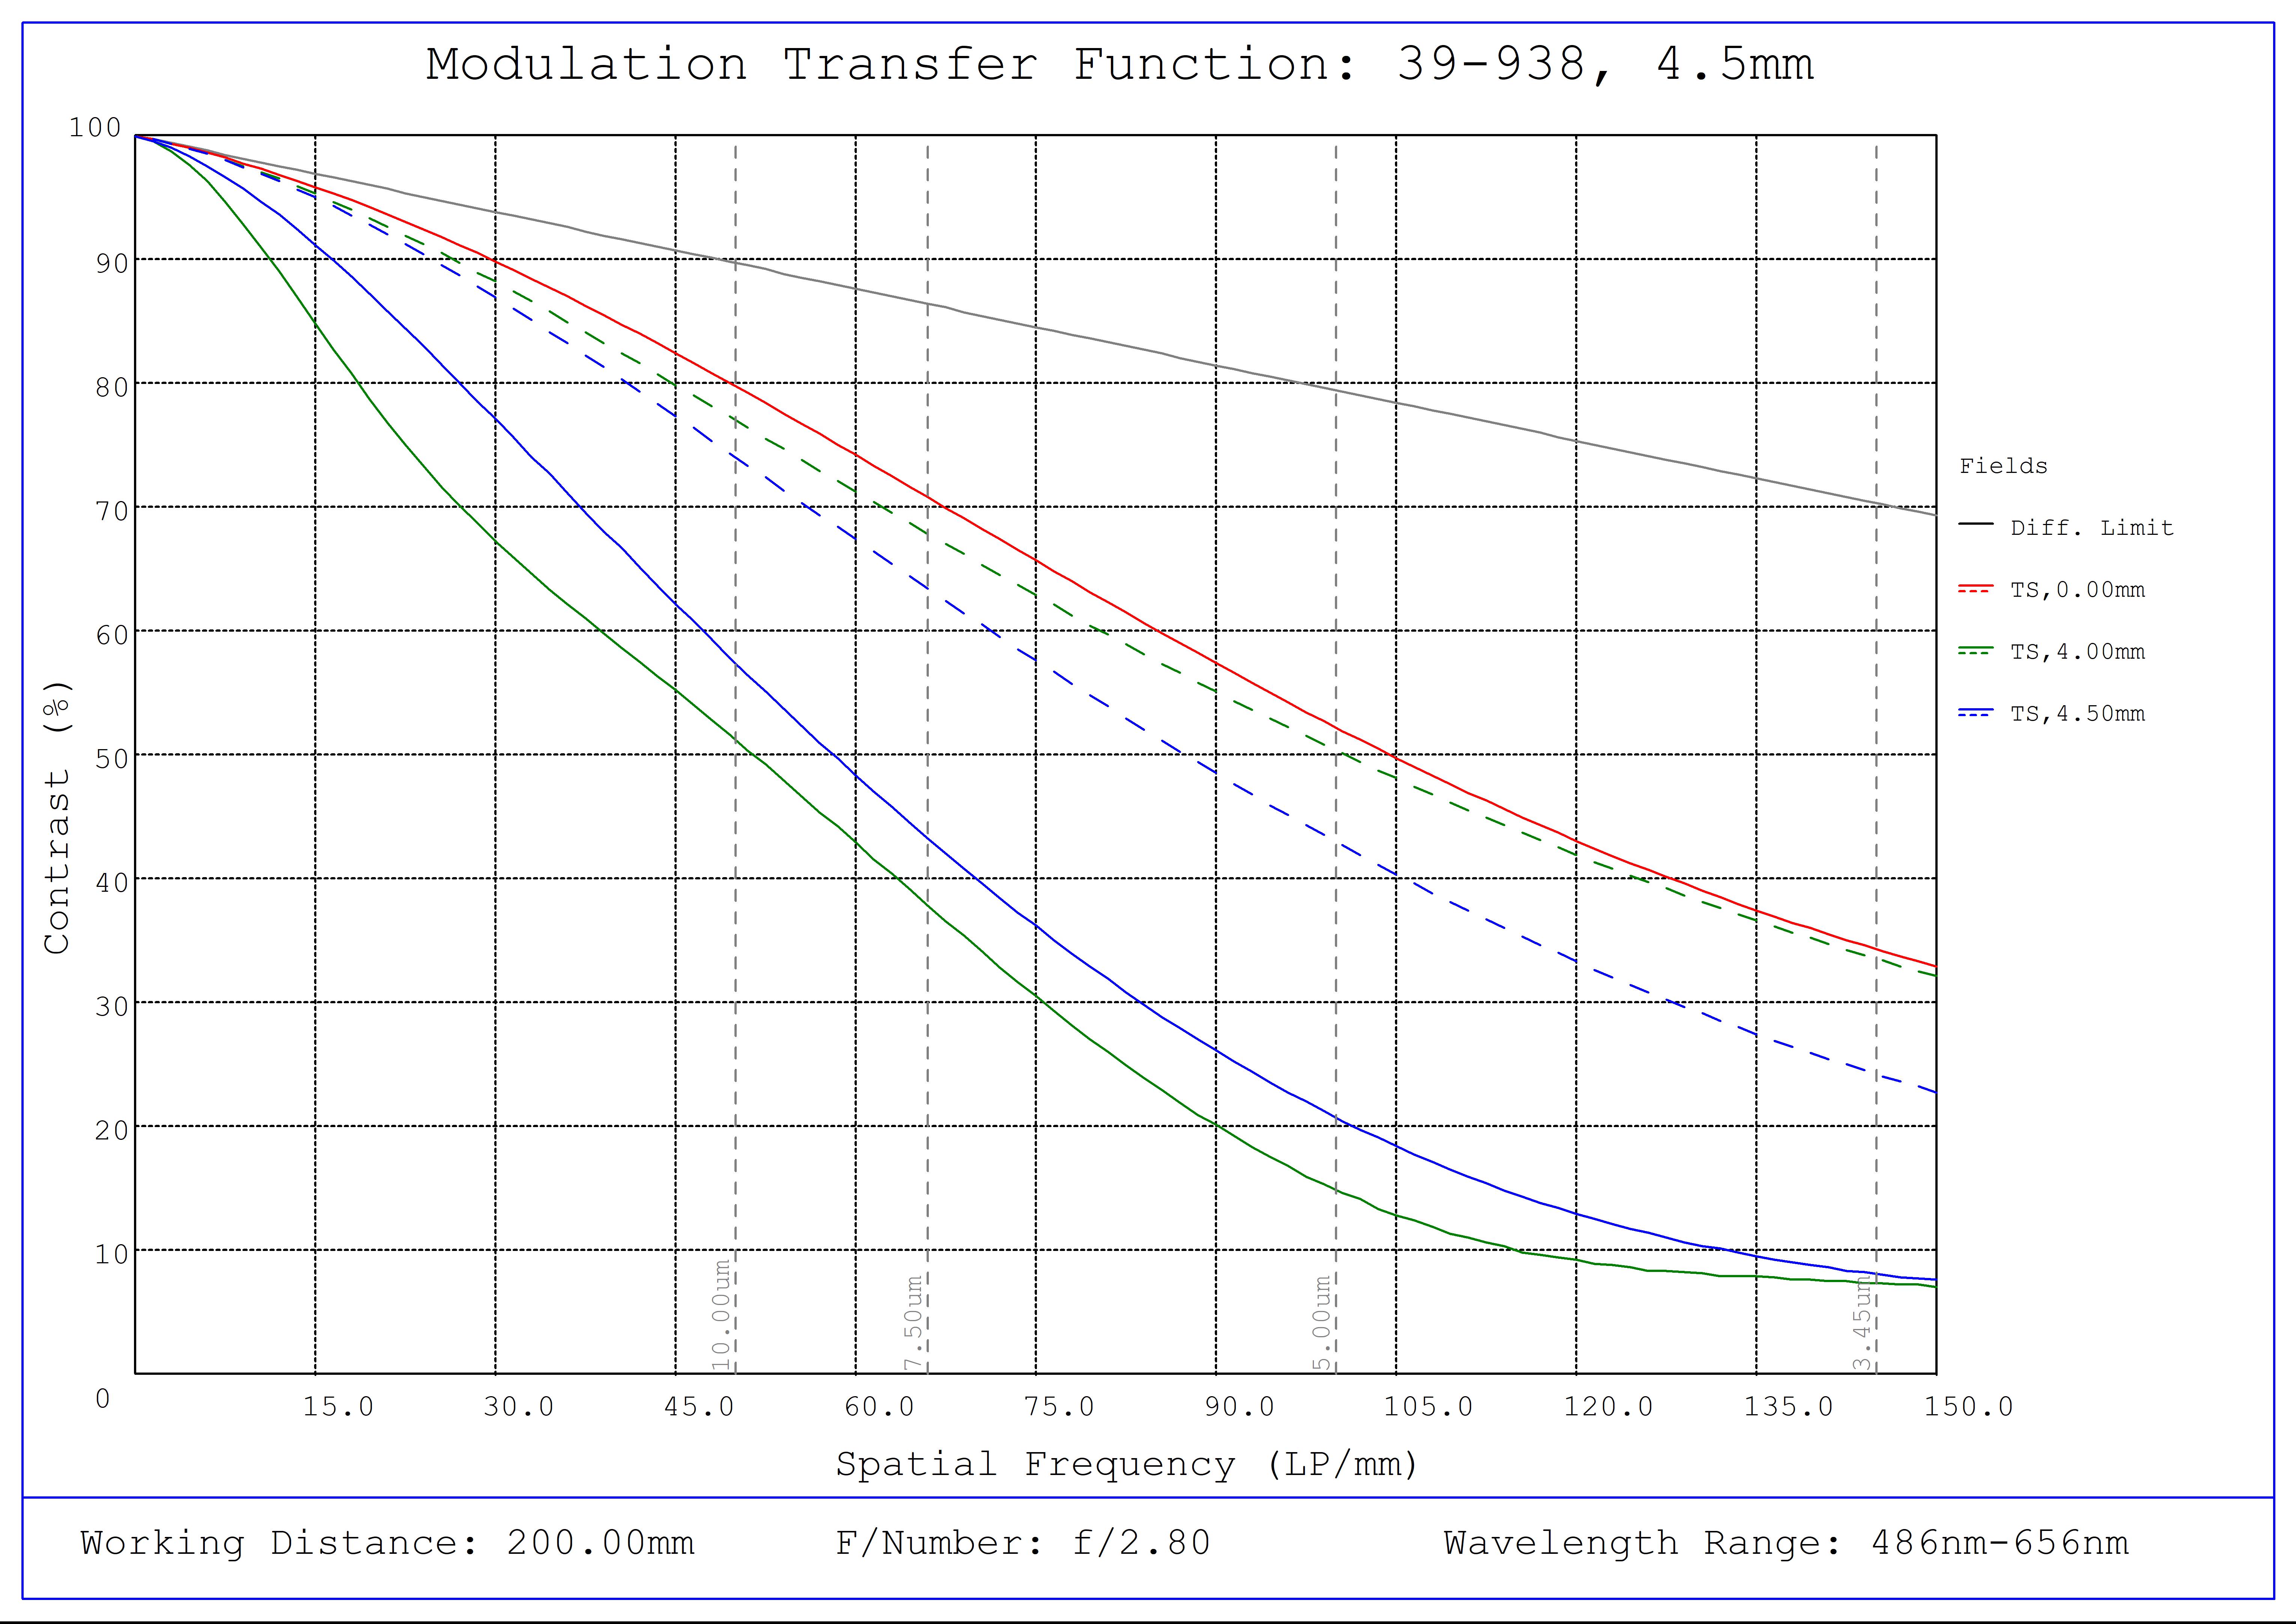 #39-938, 4.5mm C VIS-NIR Series Fixed Focal Length Lens, Modulated Transfer Function (MTF) Plot, 200mm Working Distance, f2.8